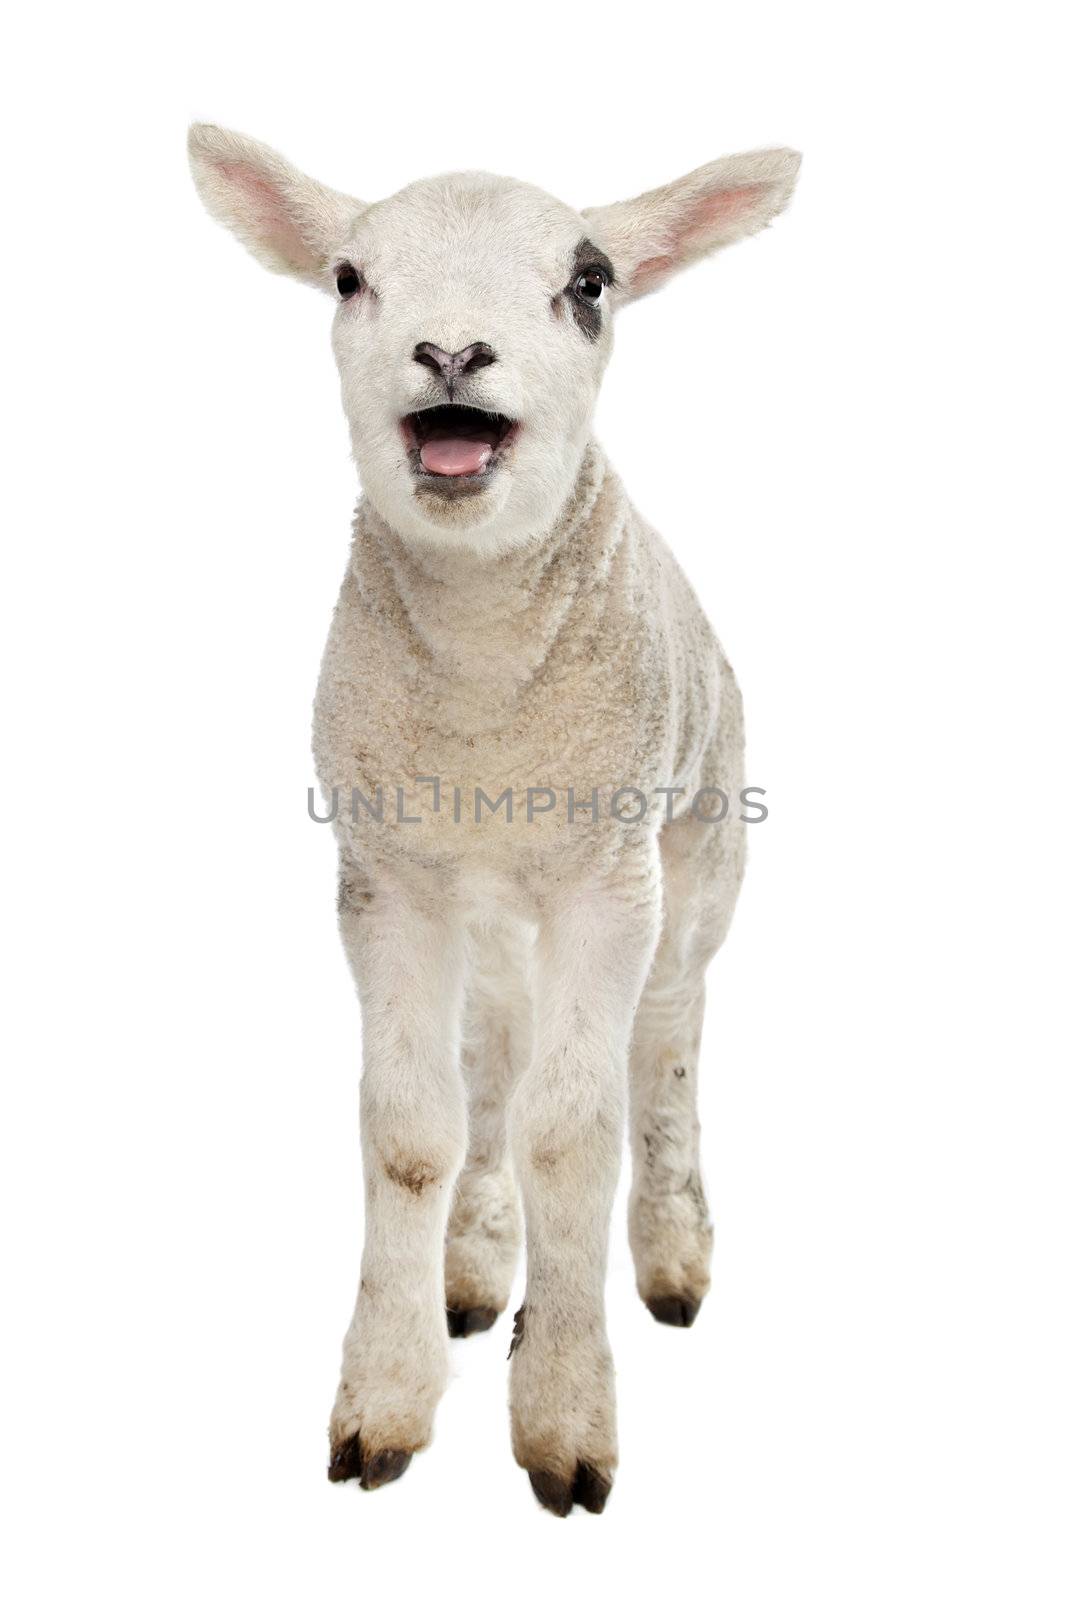 Lamb by eriklam